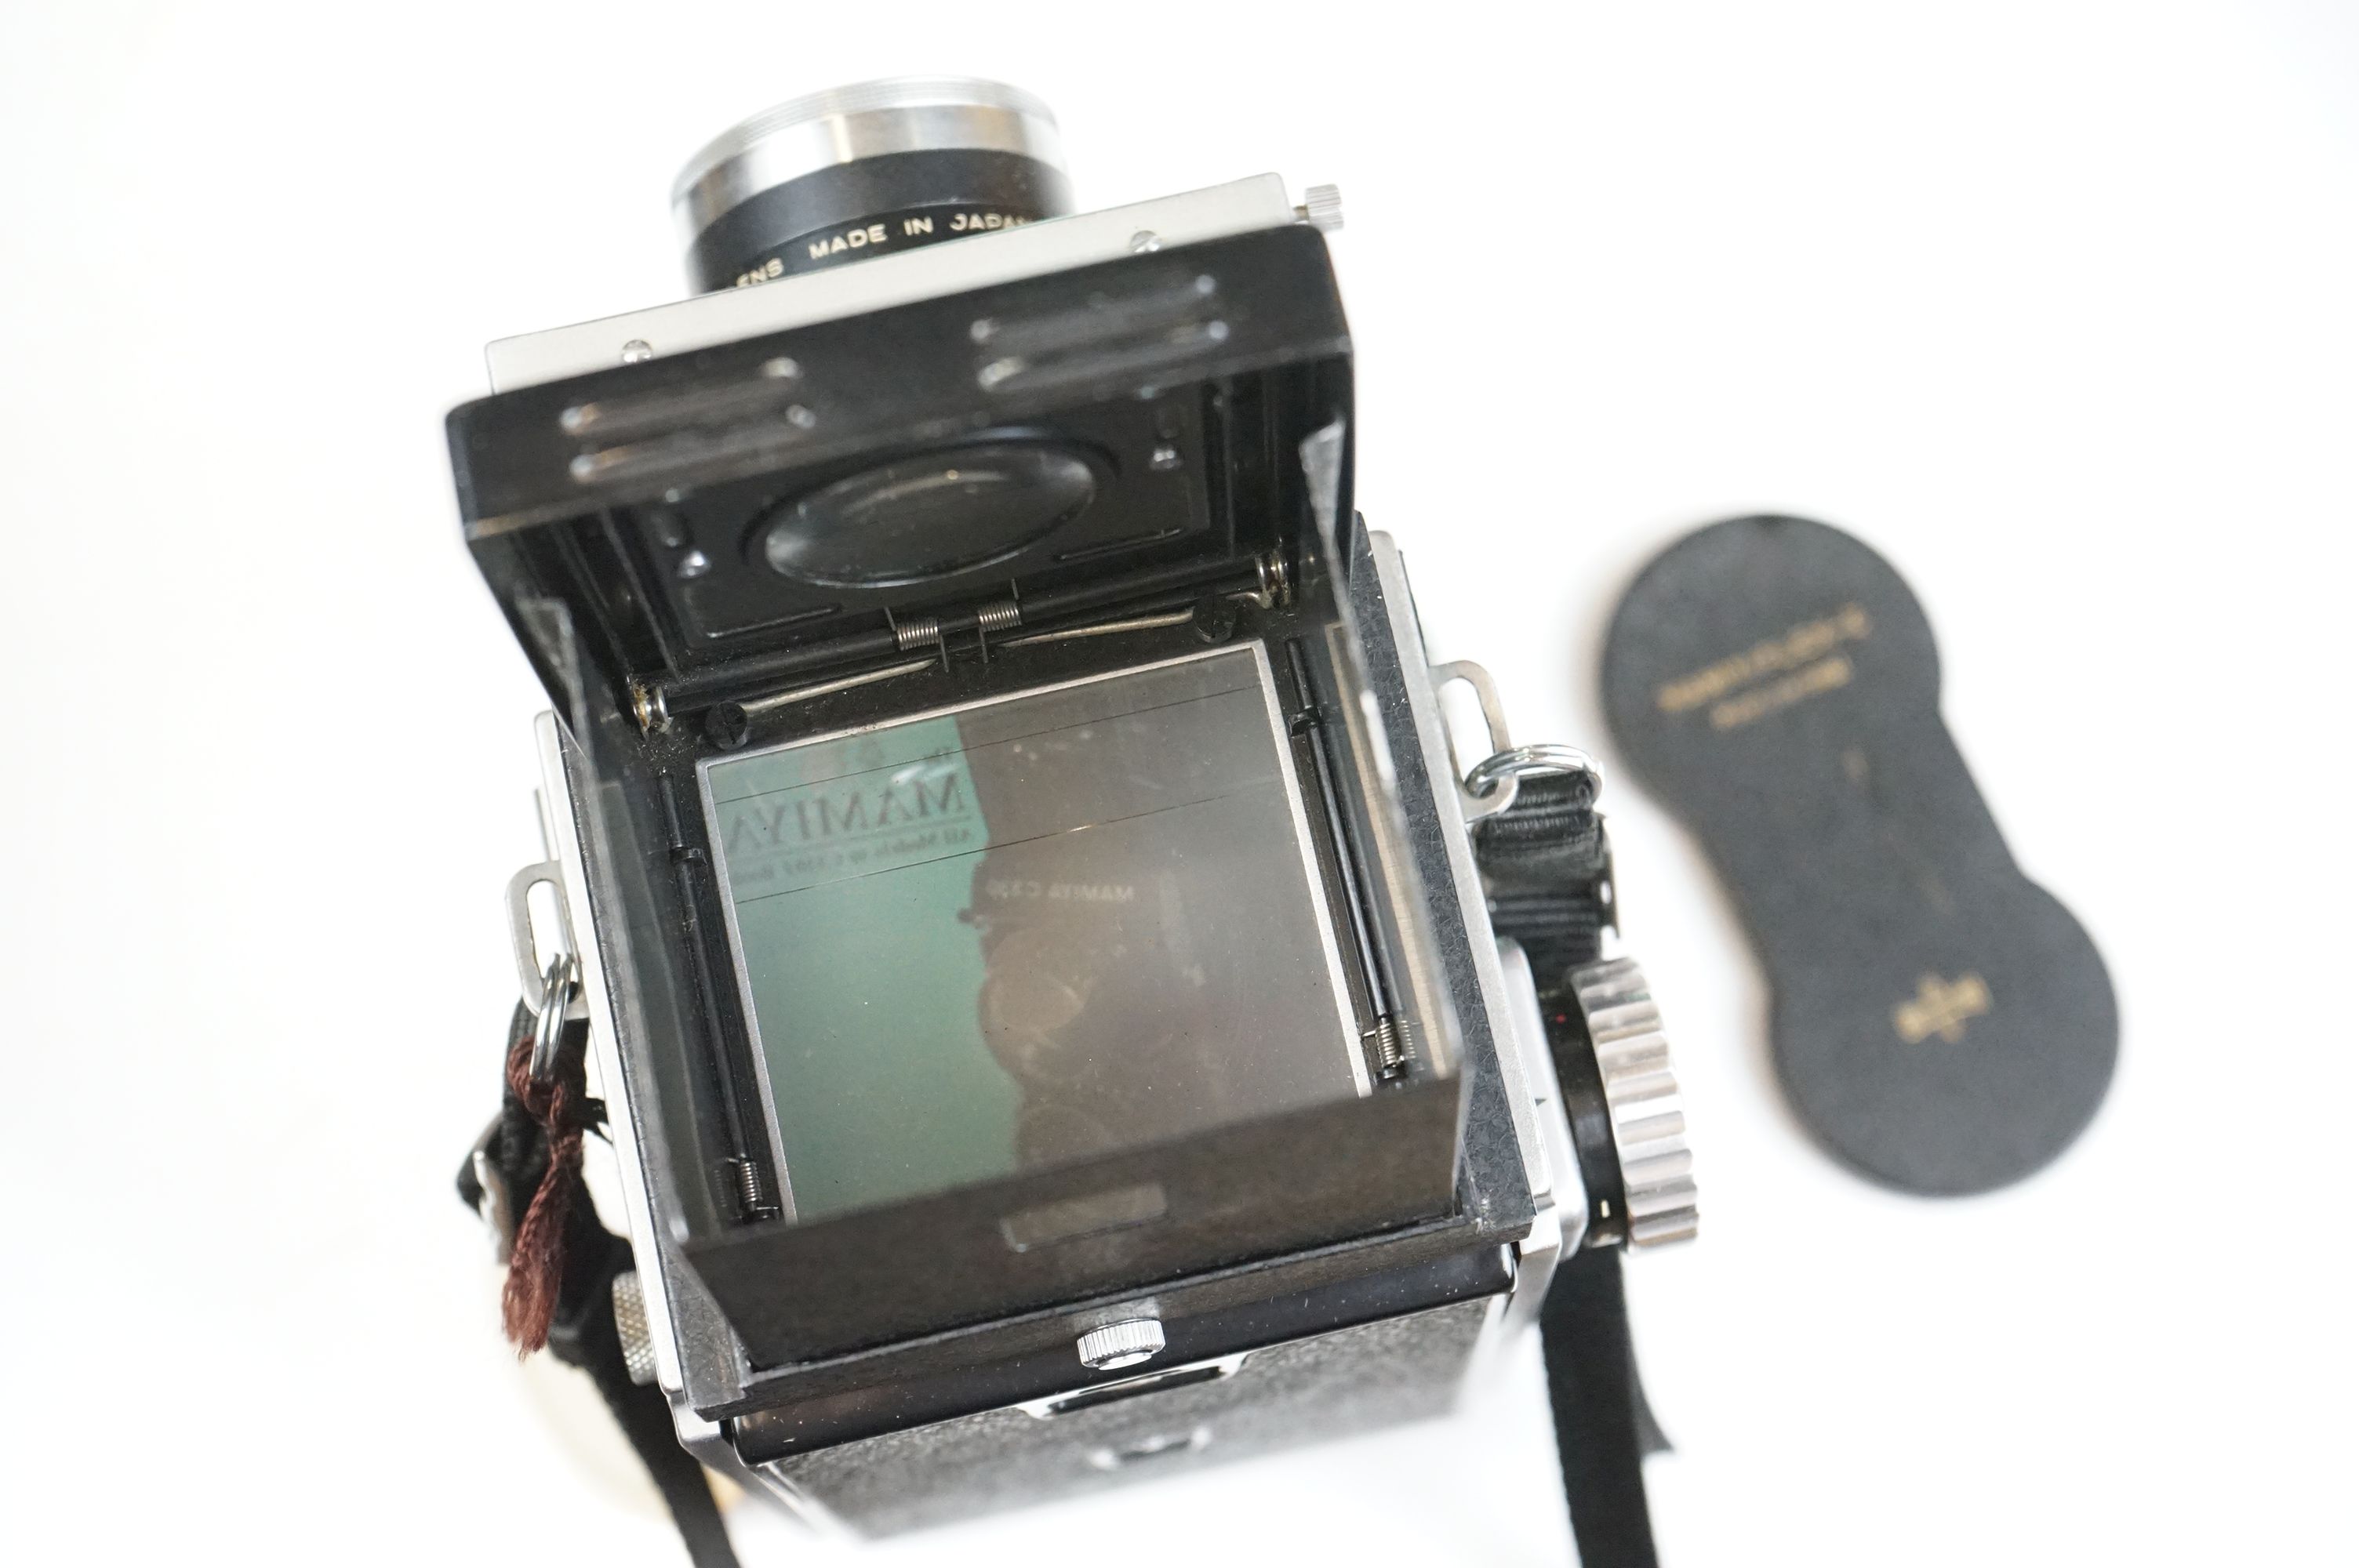 Mamiya Flex C Professional Medium Format Camera with accessories - Image 6 of 14